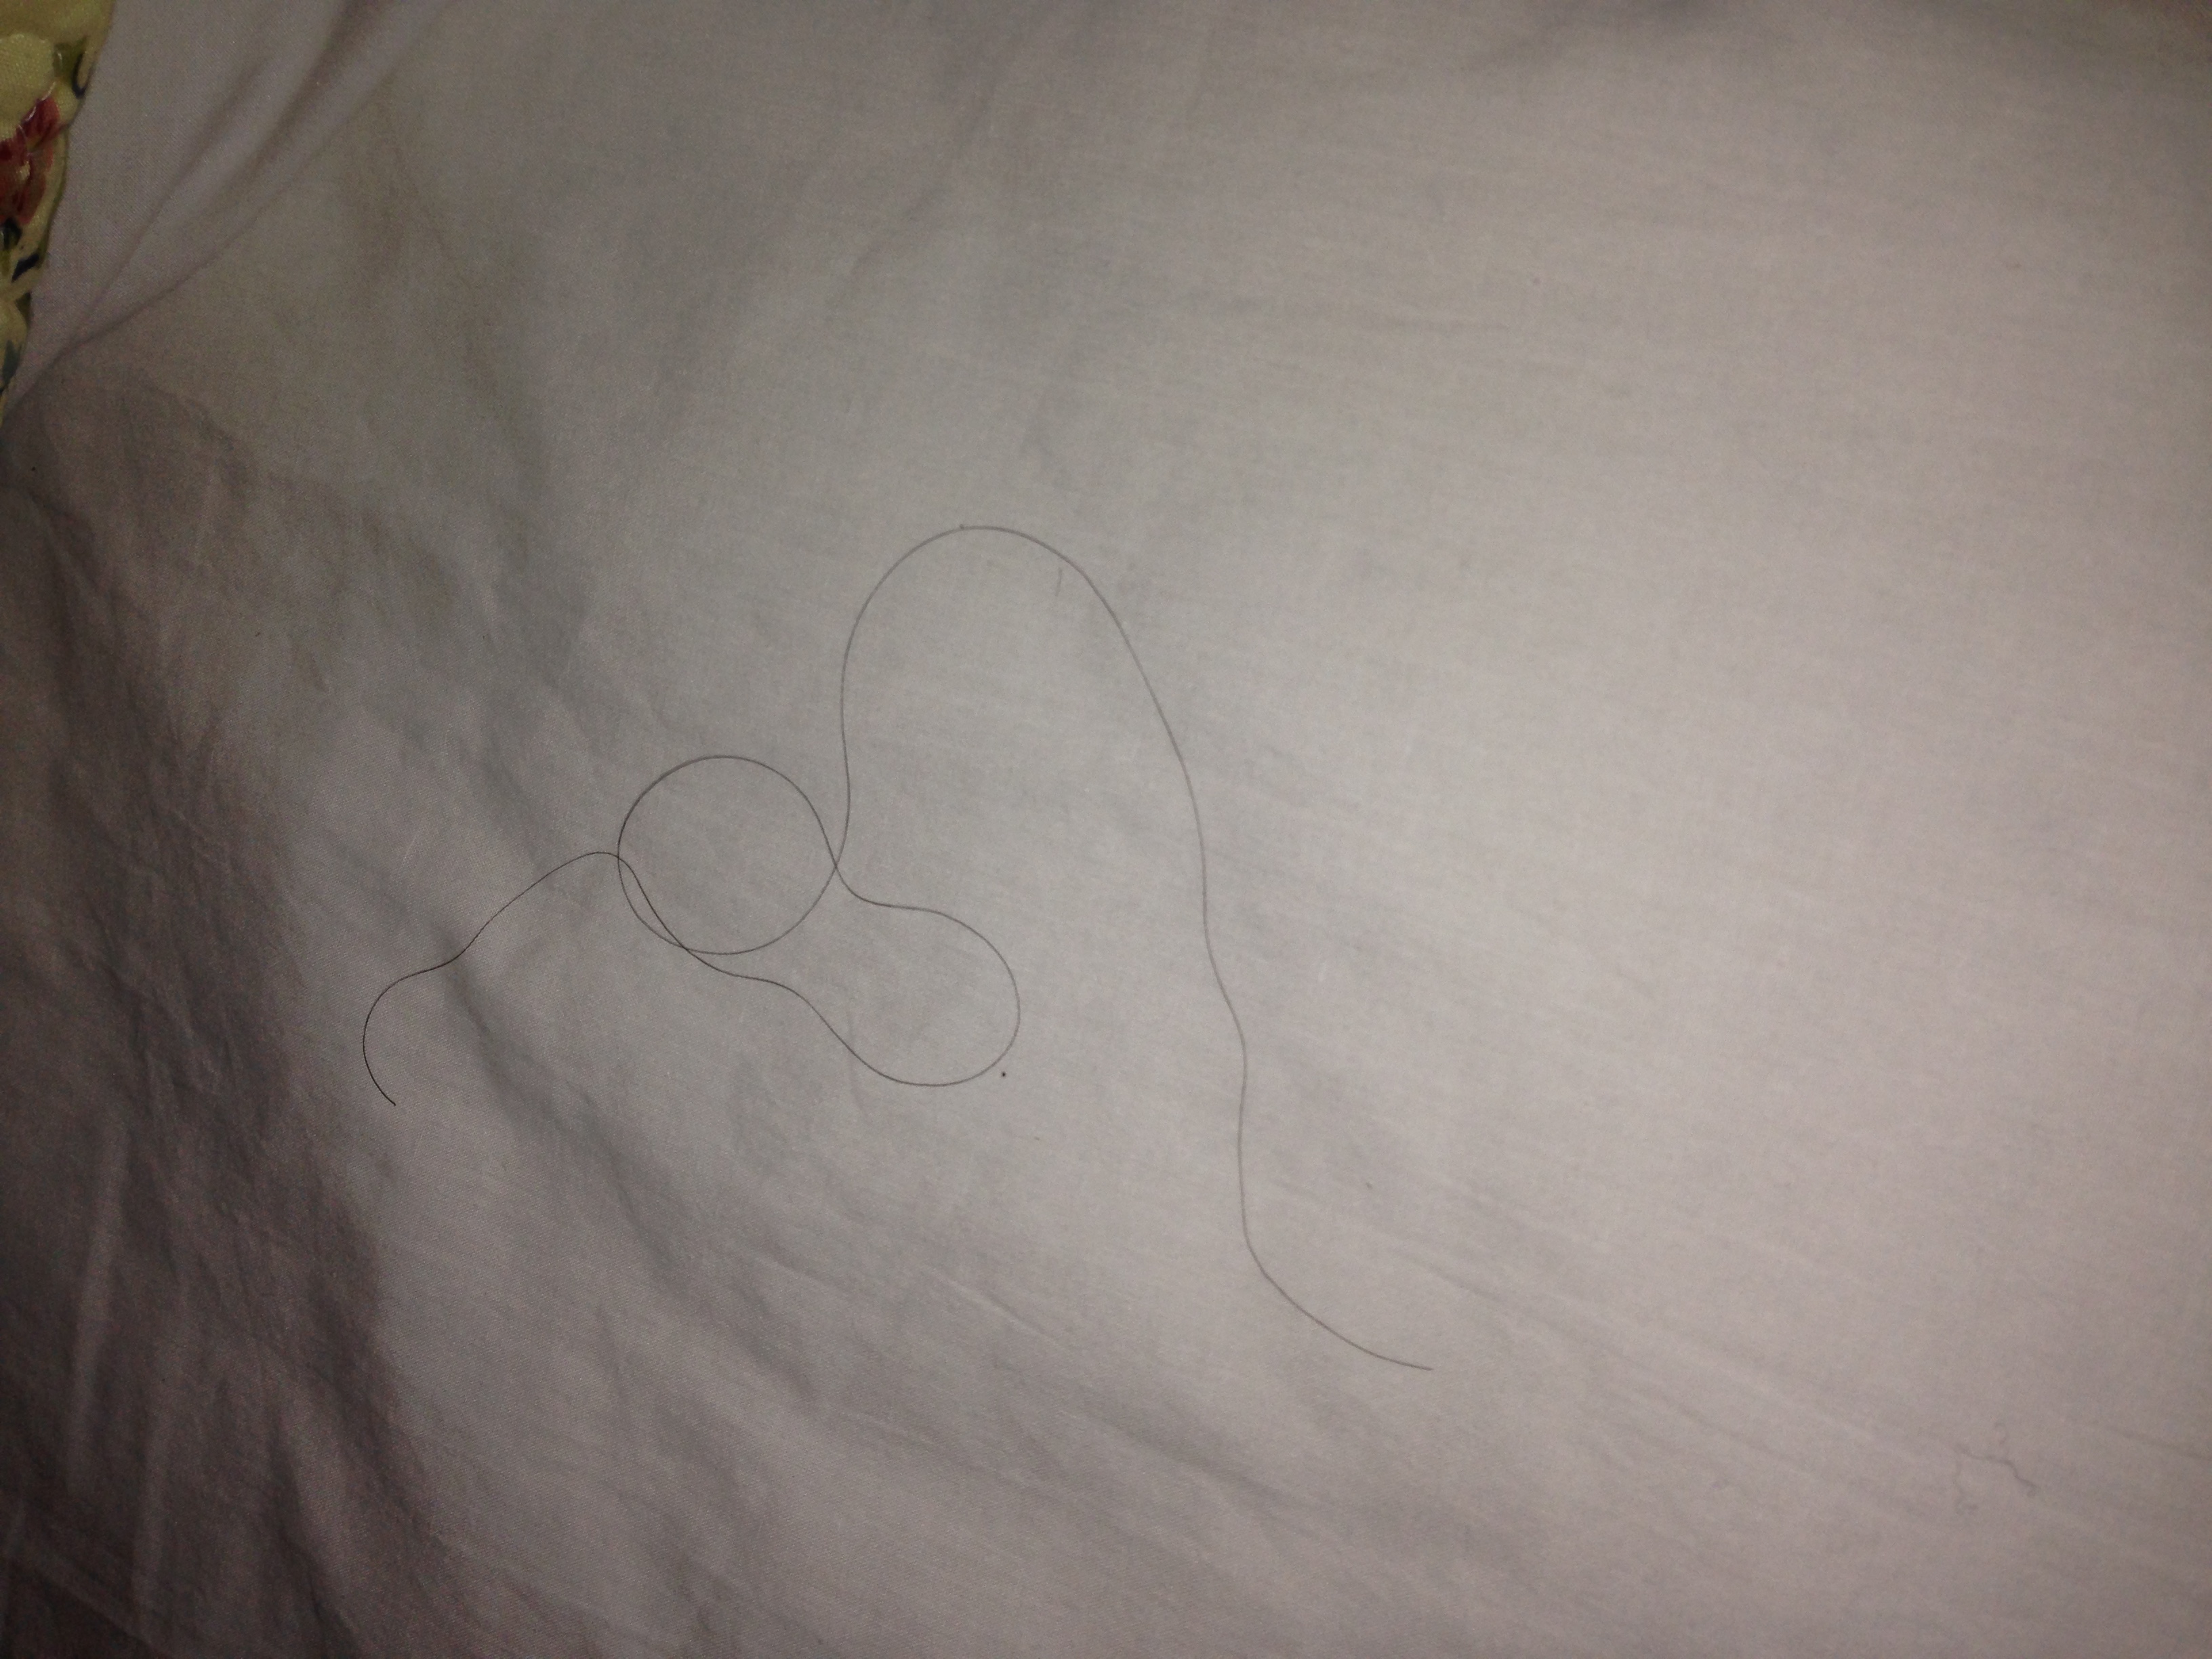 Hairs found in bedding.